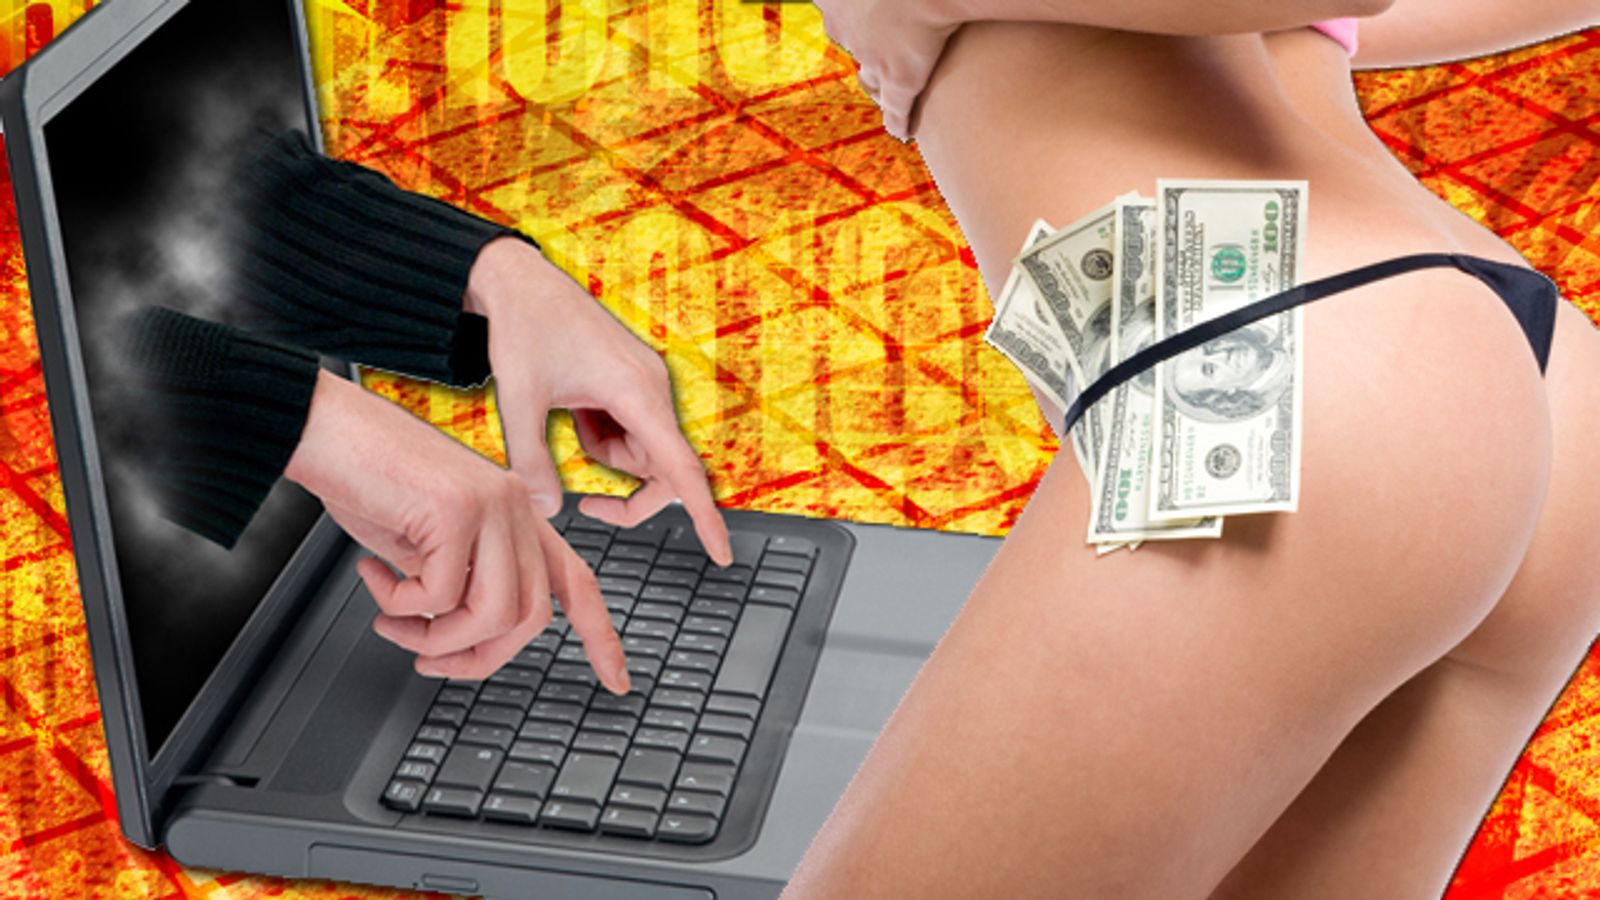 Researchers Ran Porn Sites to Assess Internet Porn Economy